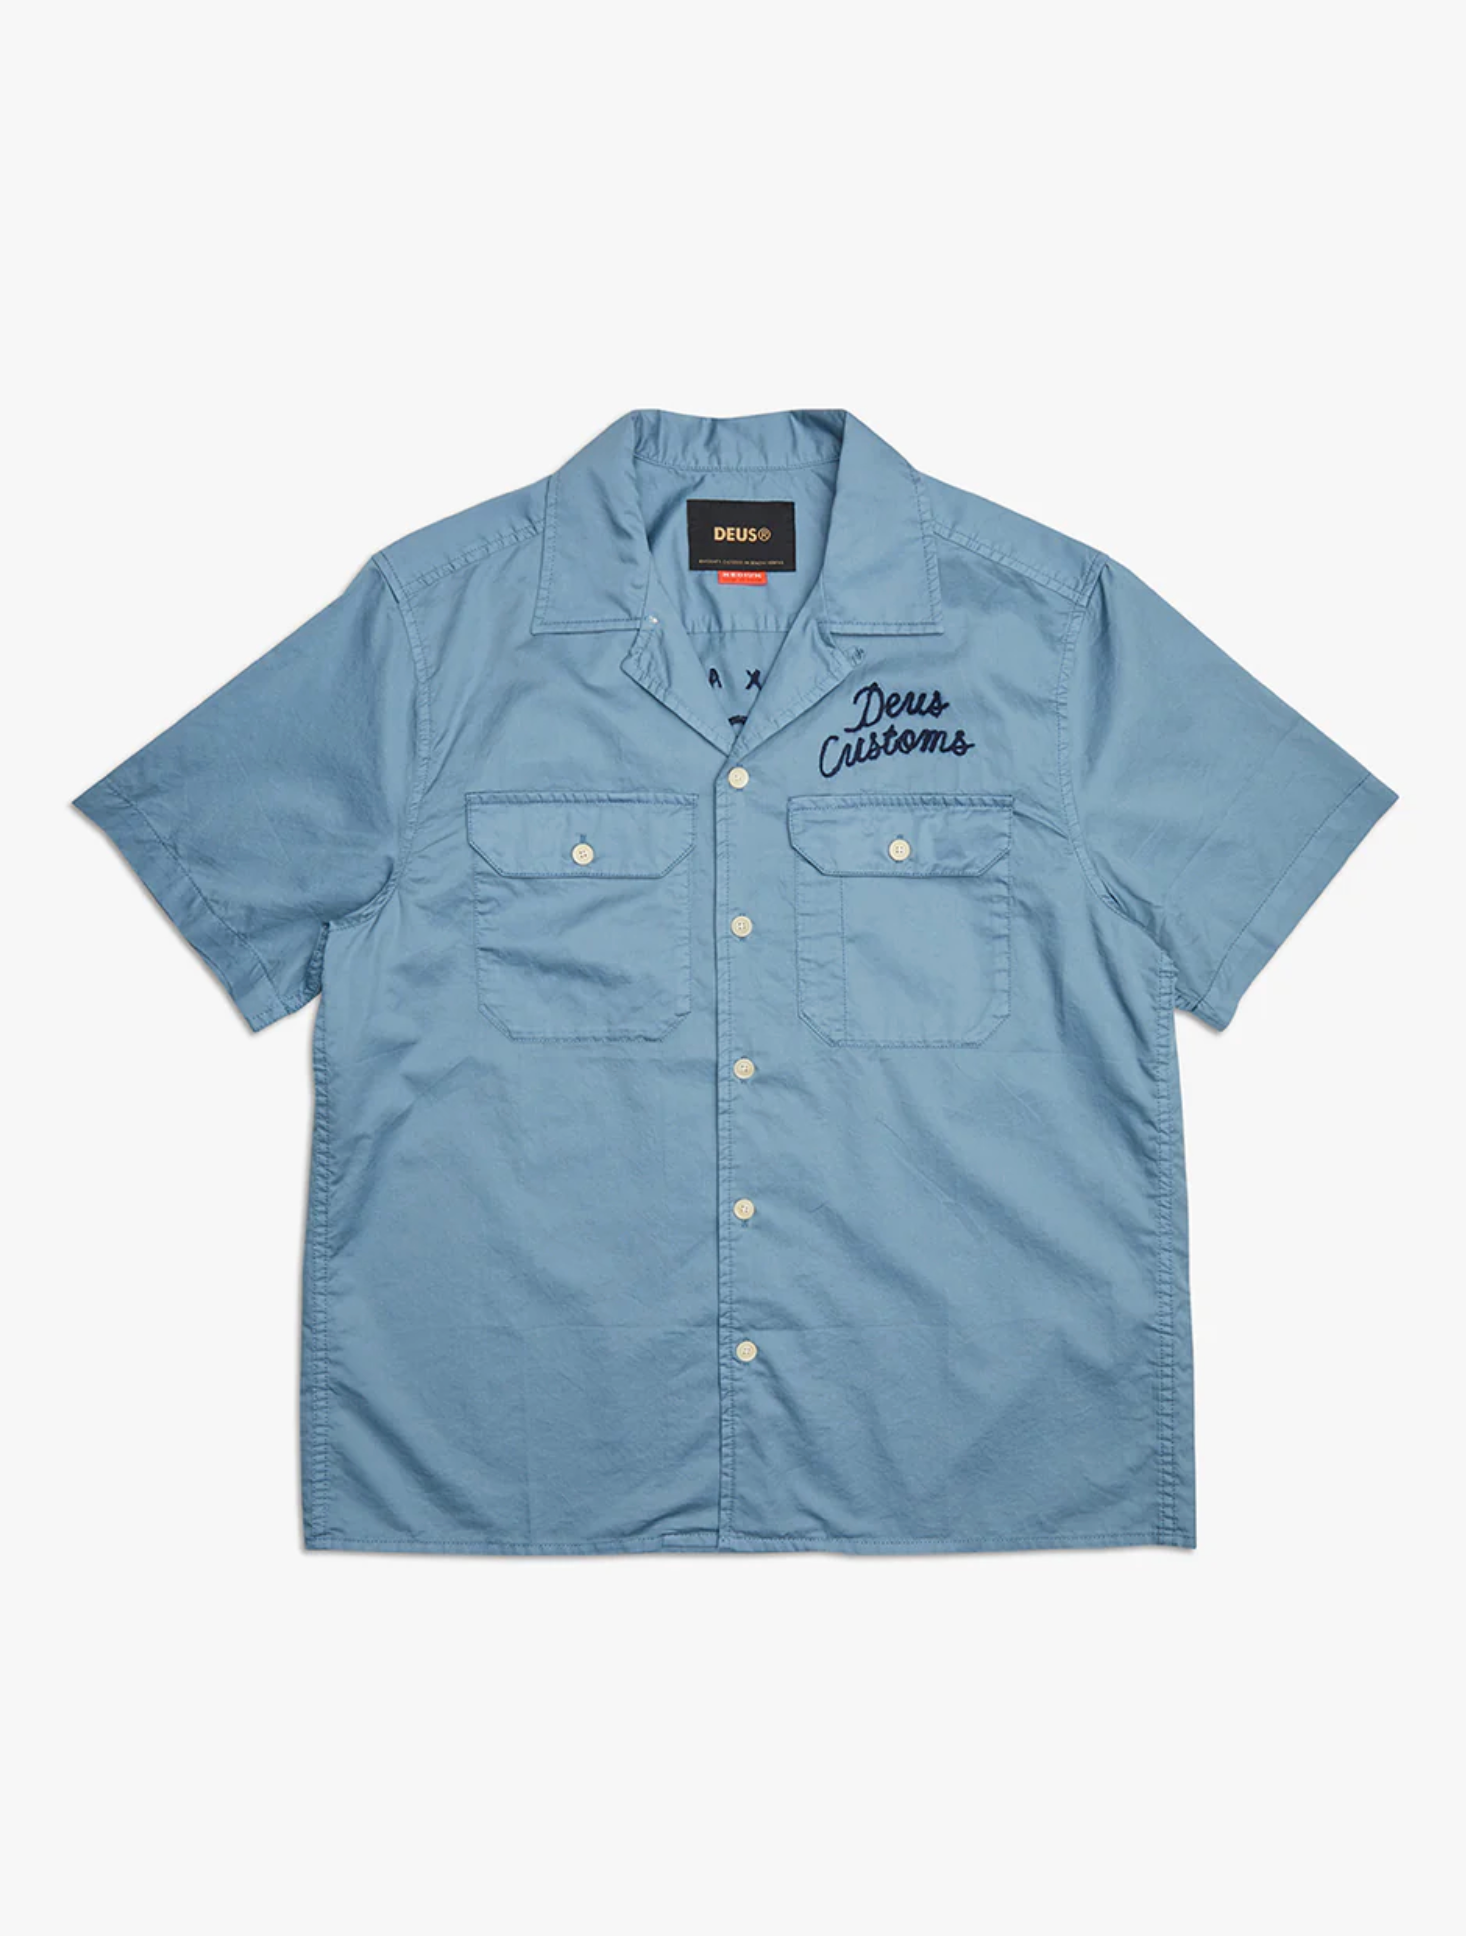 Bluestone Simplicity Shirt